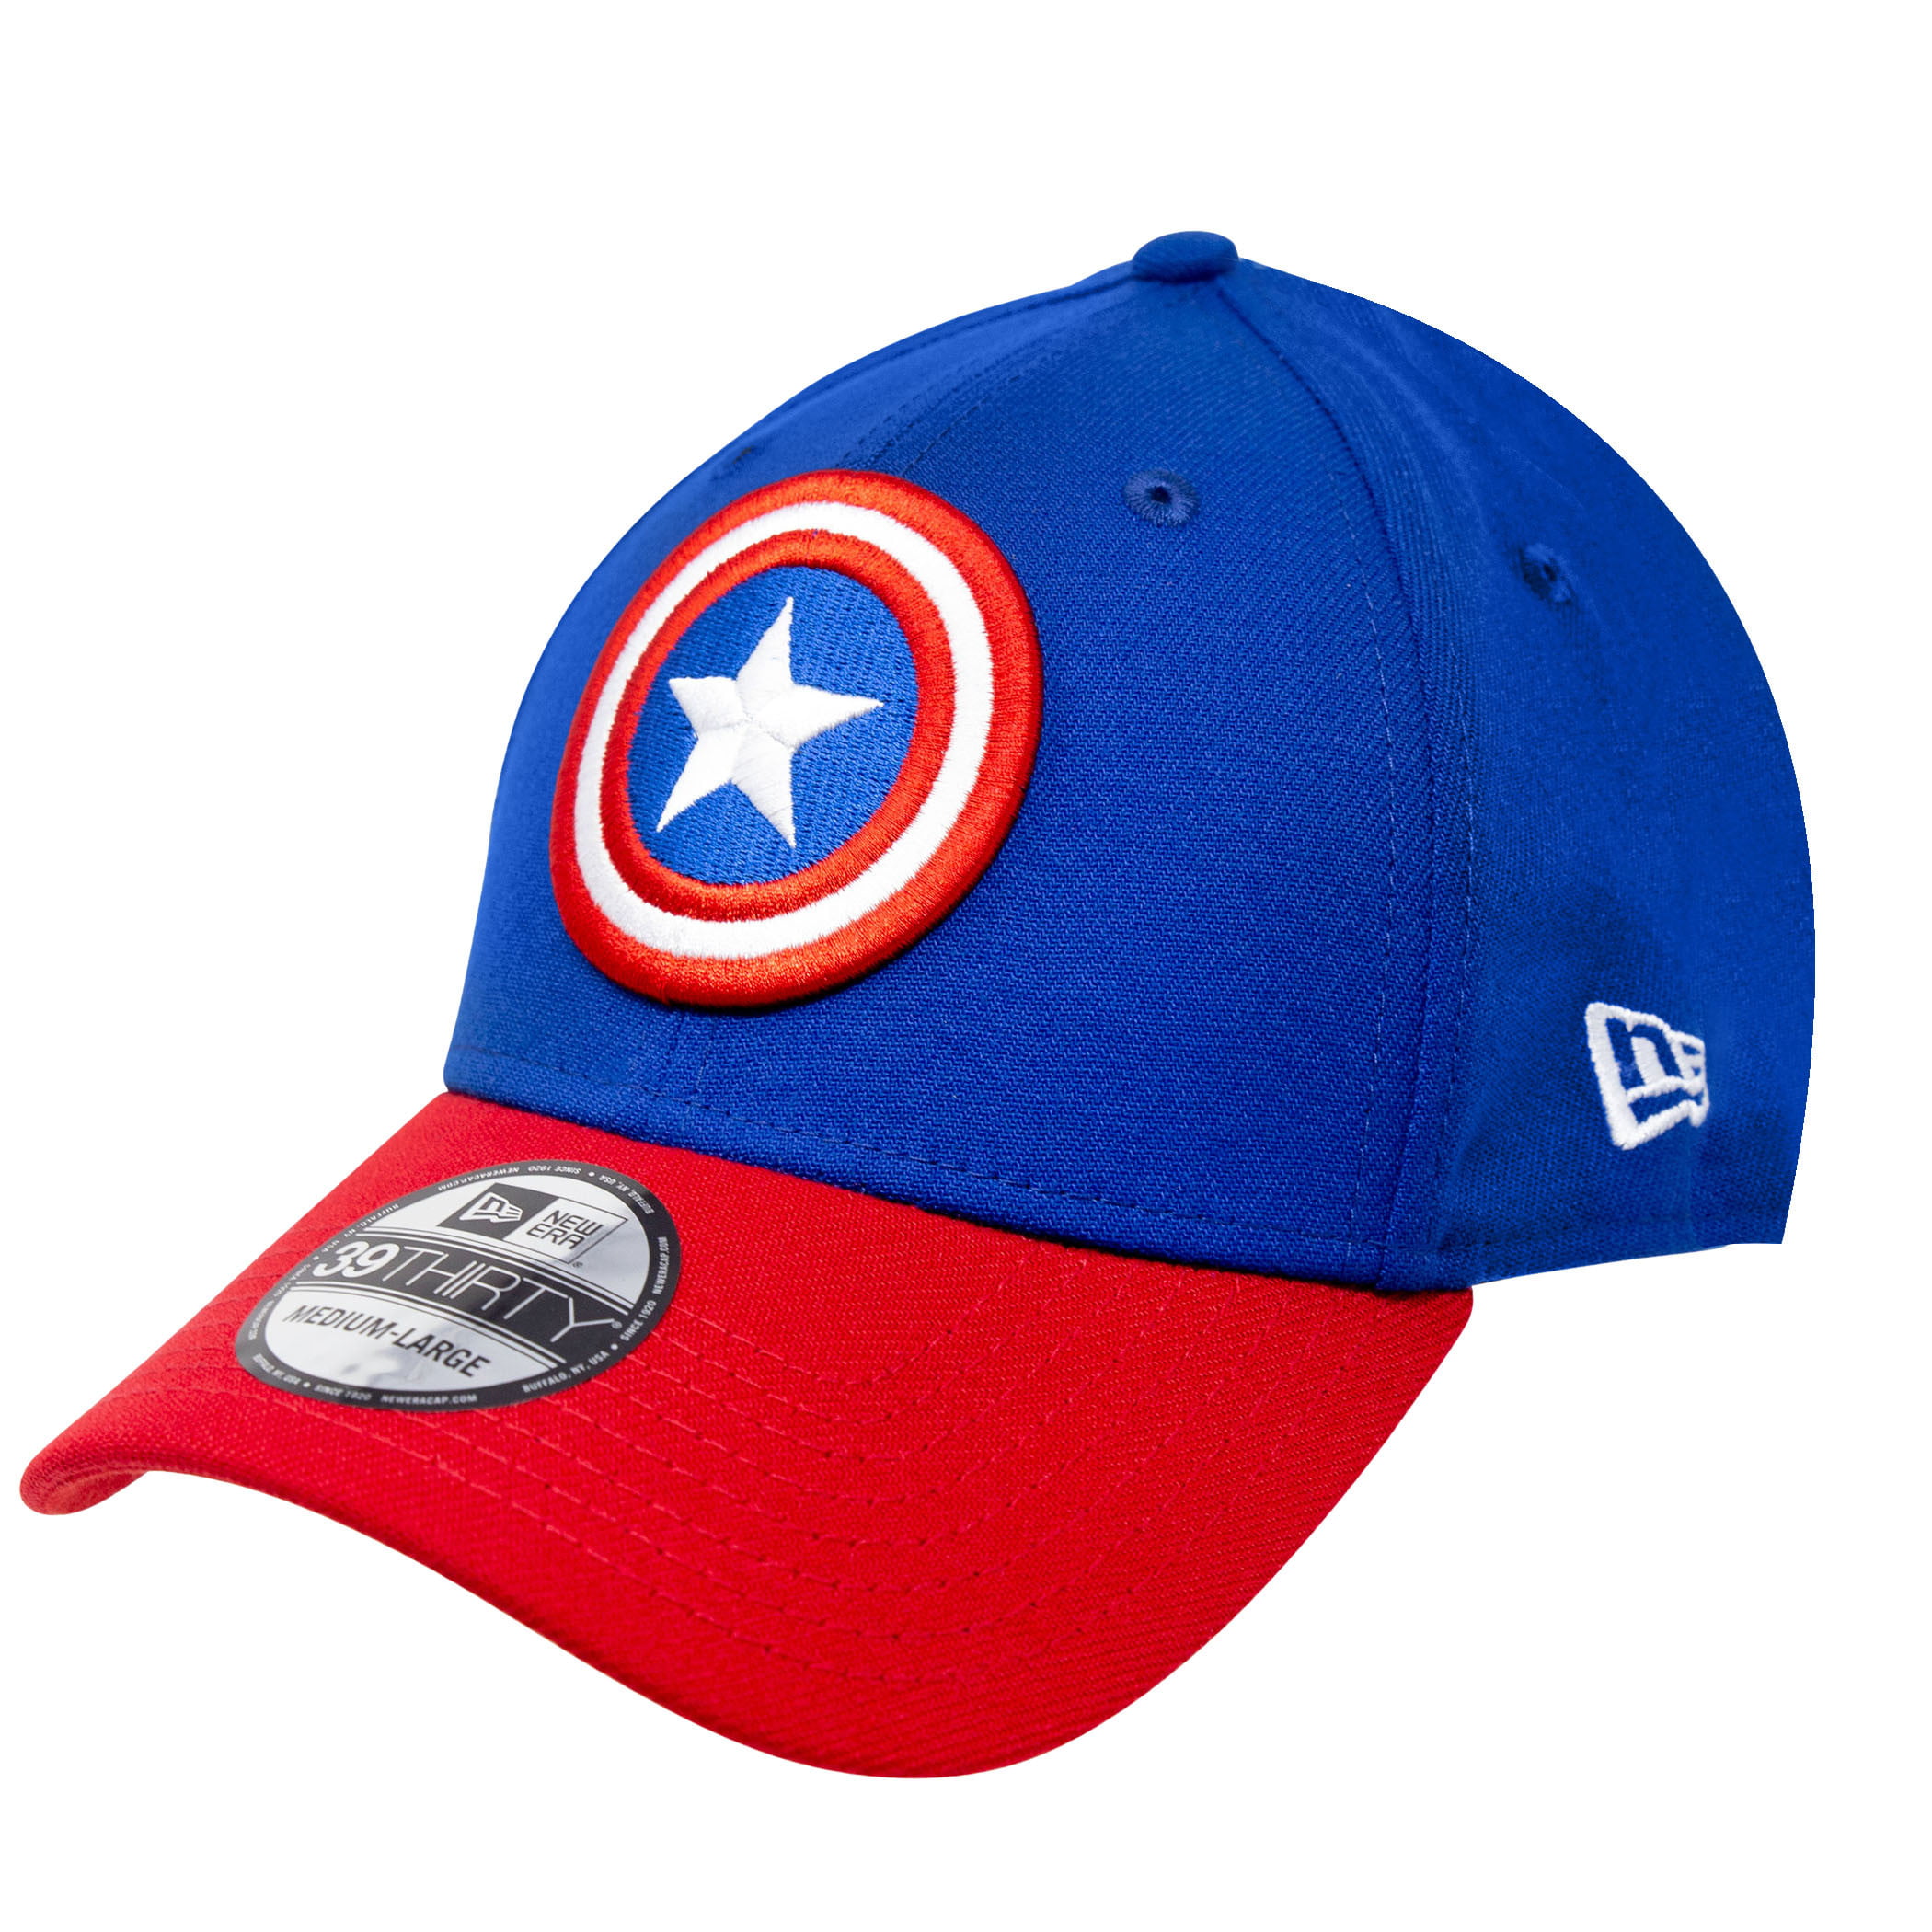 9FIFTY SNAP BACK CAP Captain America blau/rot Original NEW ERA 